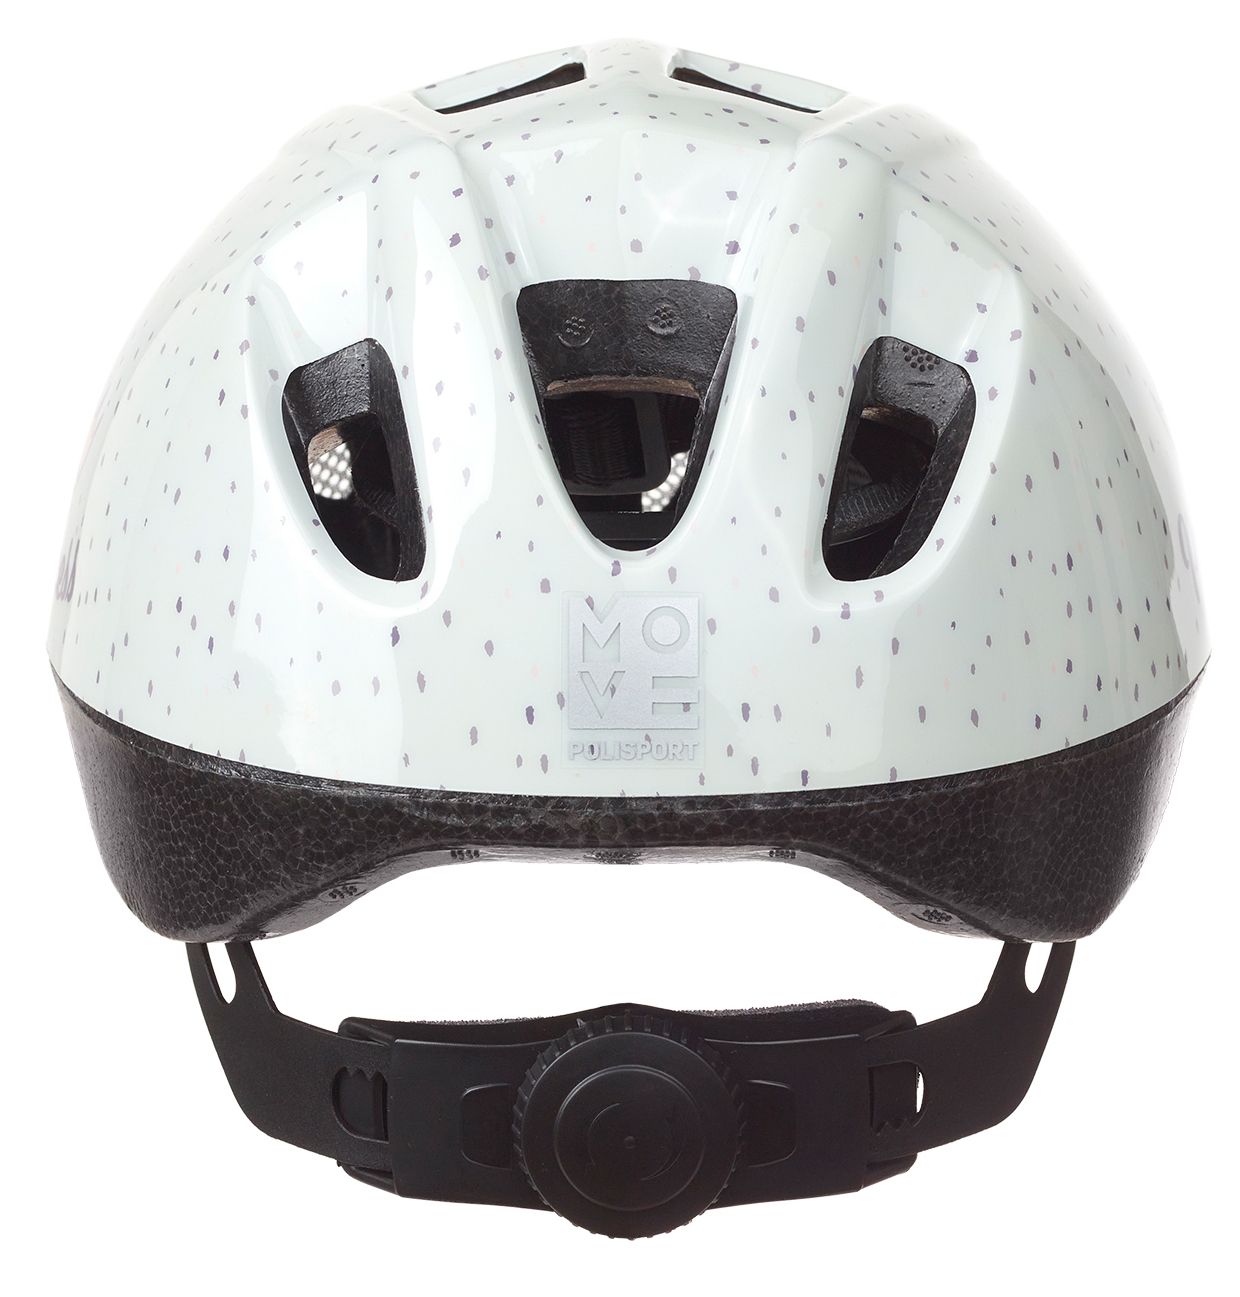 Polispgoudt Croona di casco per bambini XS 46-53 cm viola